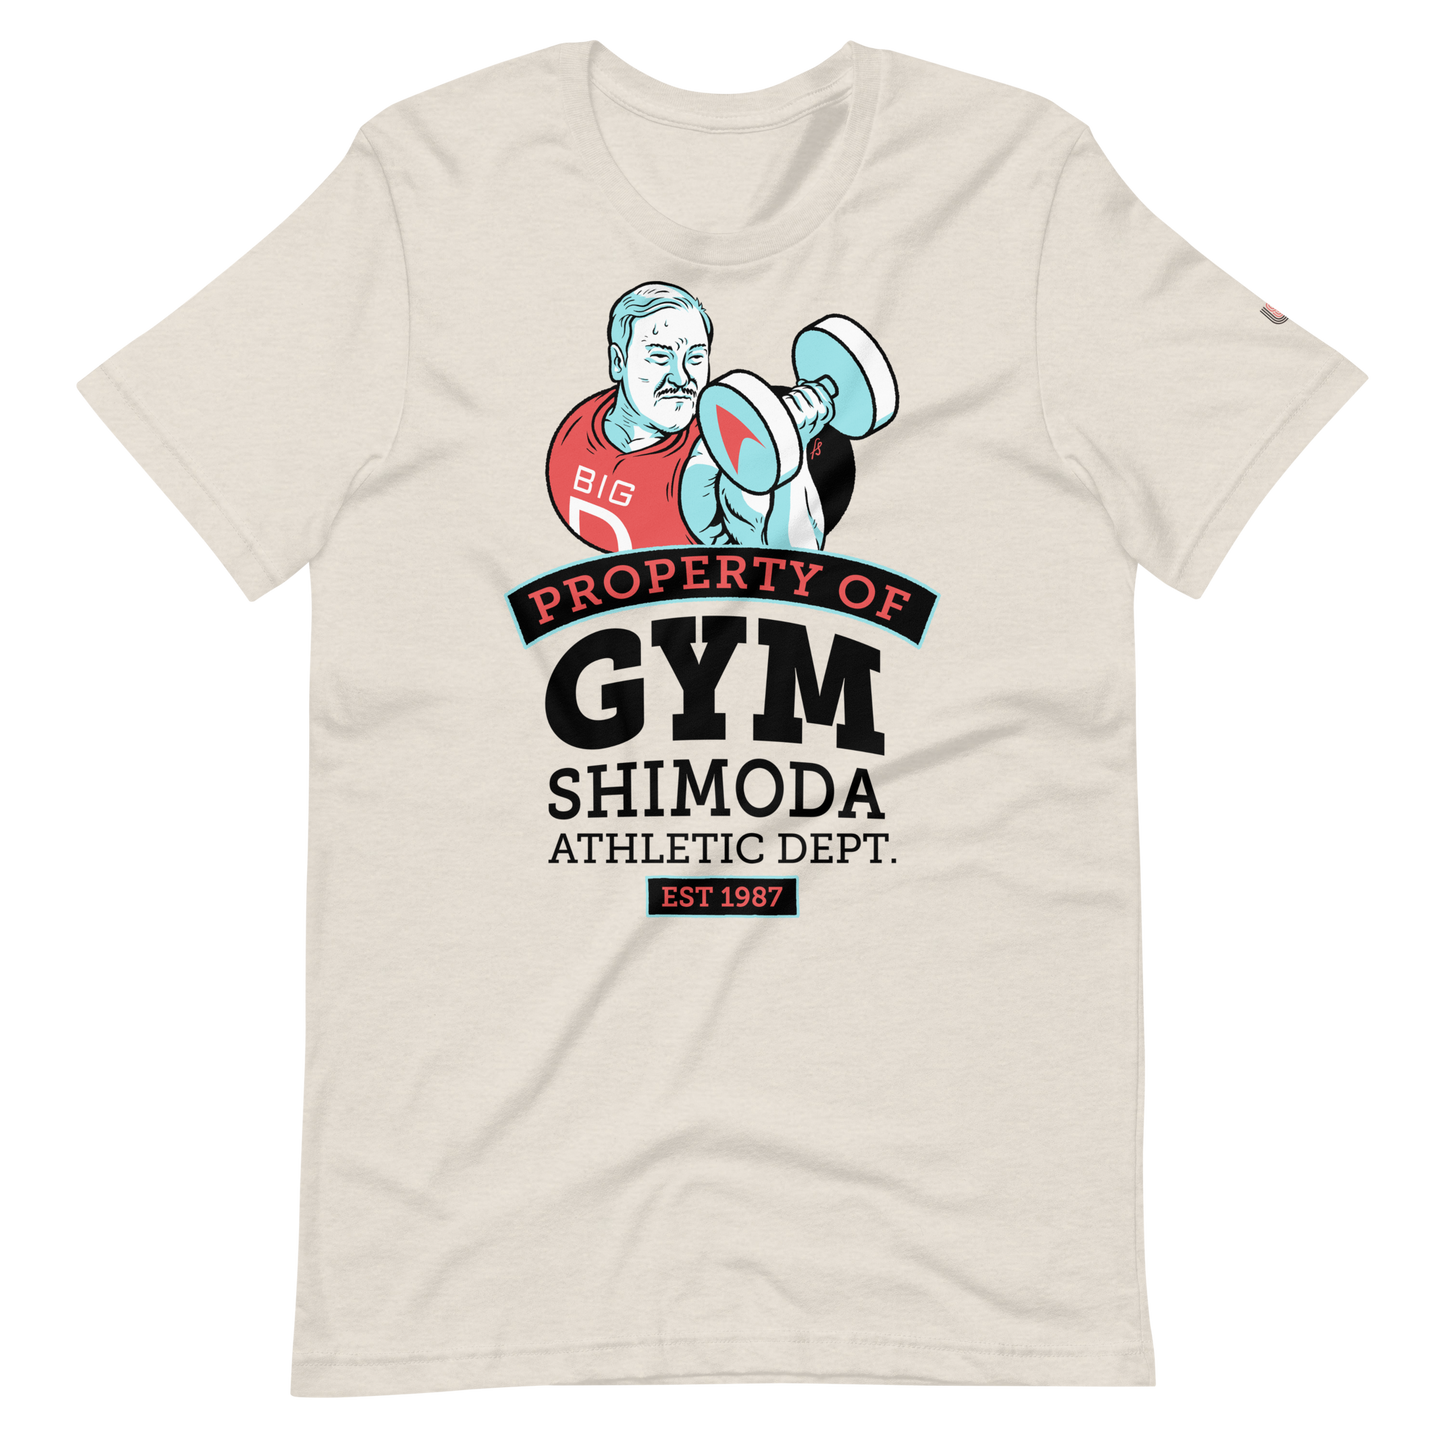 Gym Shimoda: T-Shirt